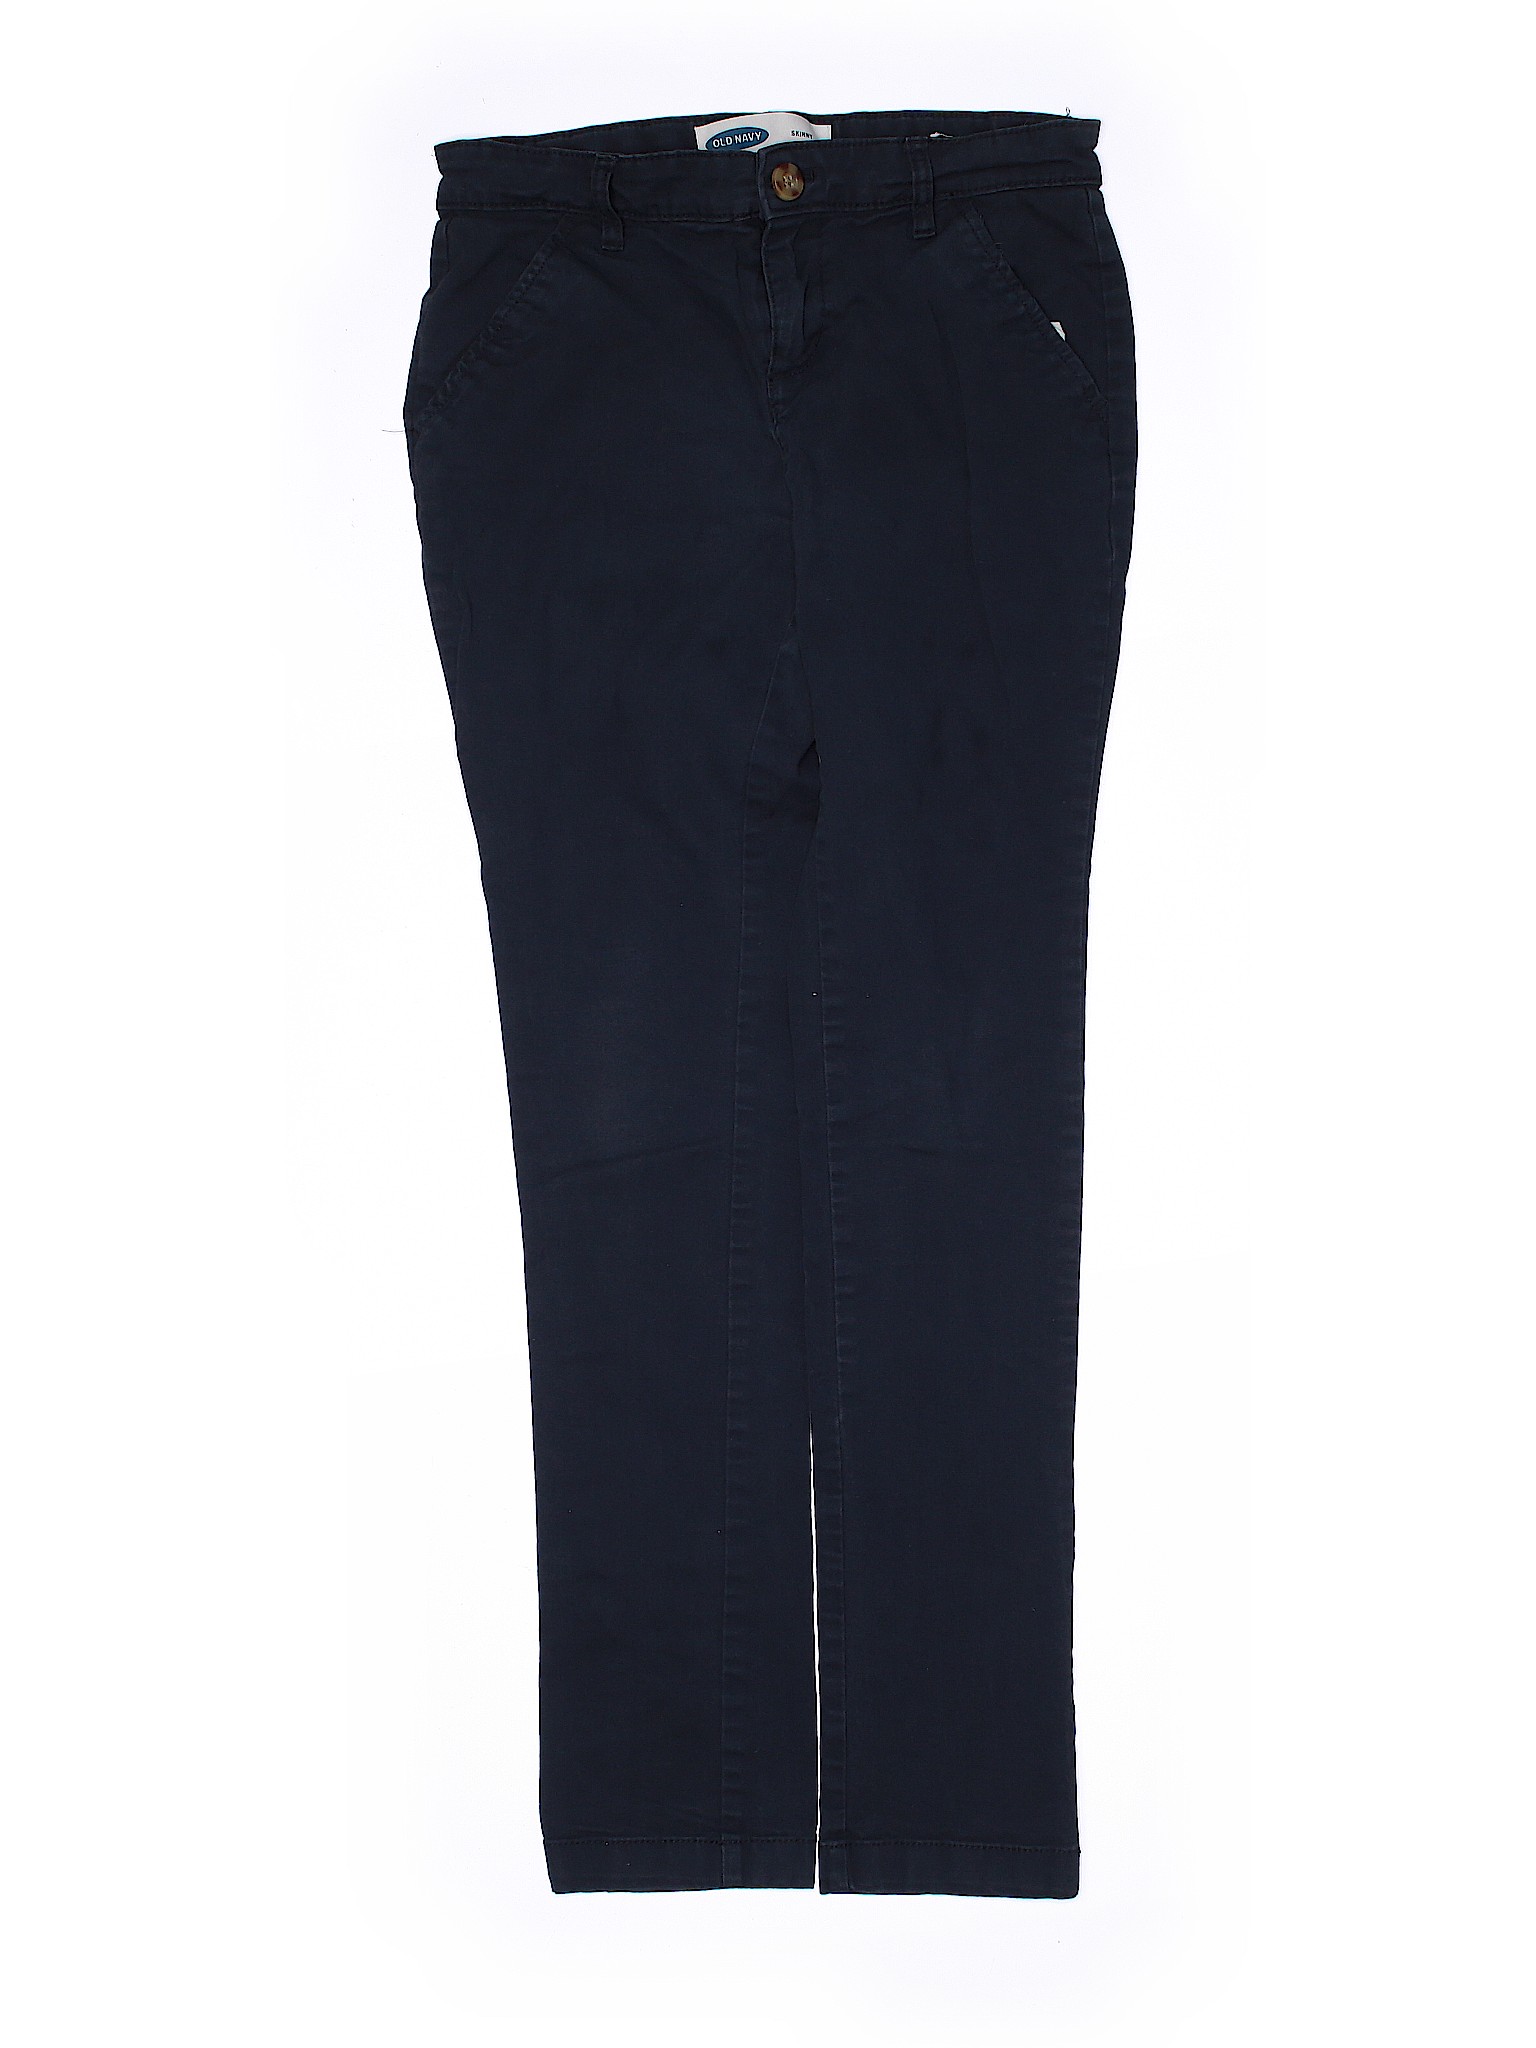 Old Navy Girls Black Dress Pants 14 | eBay